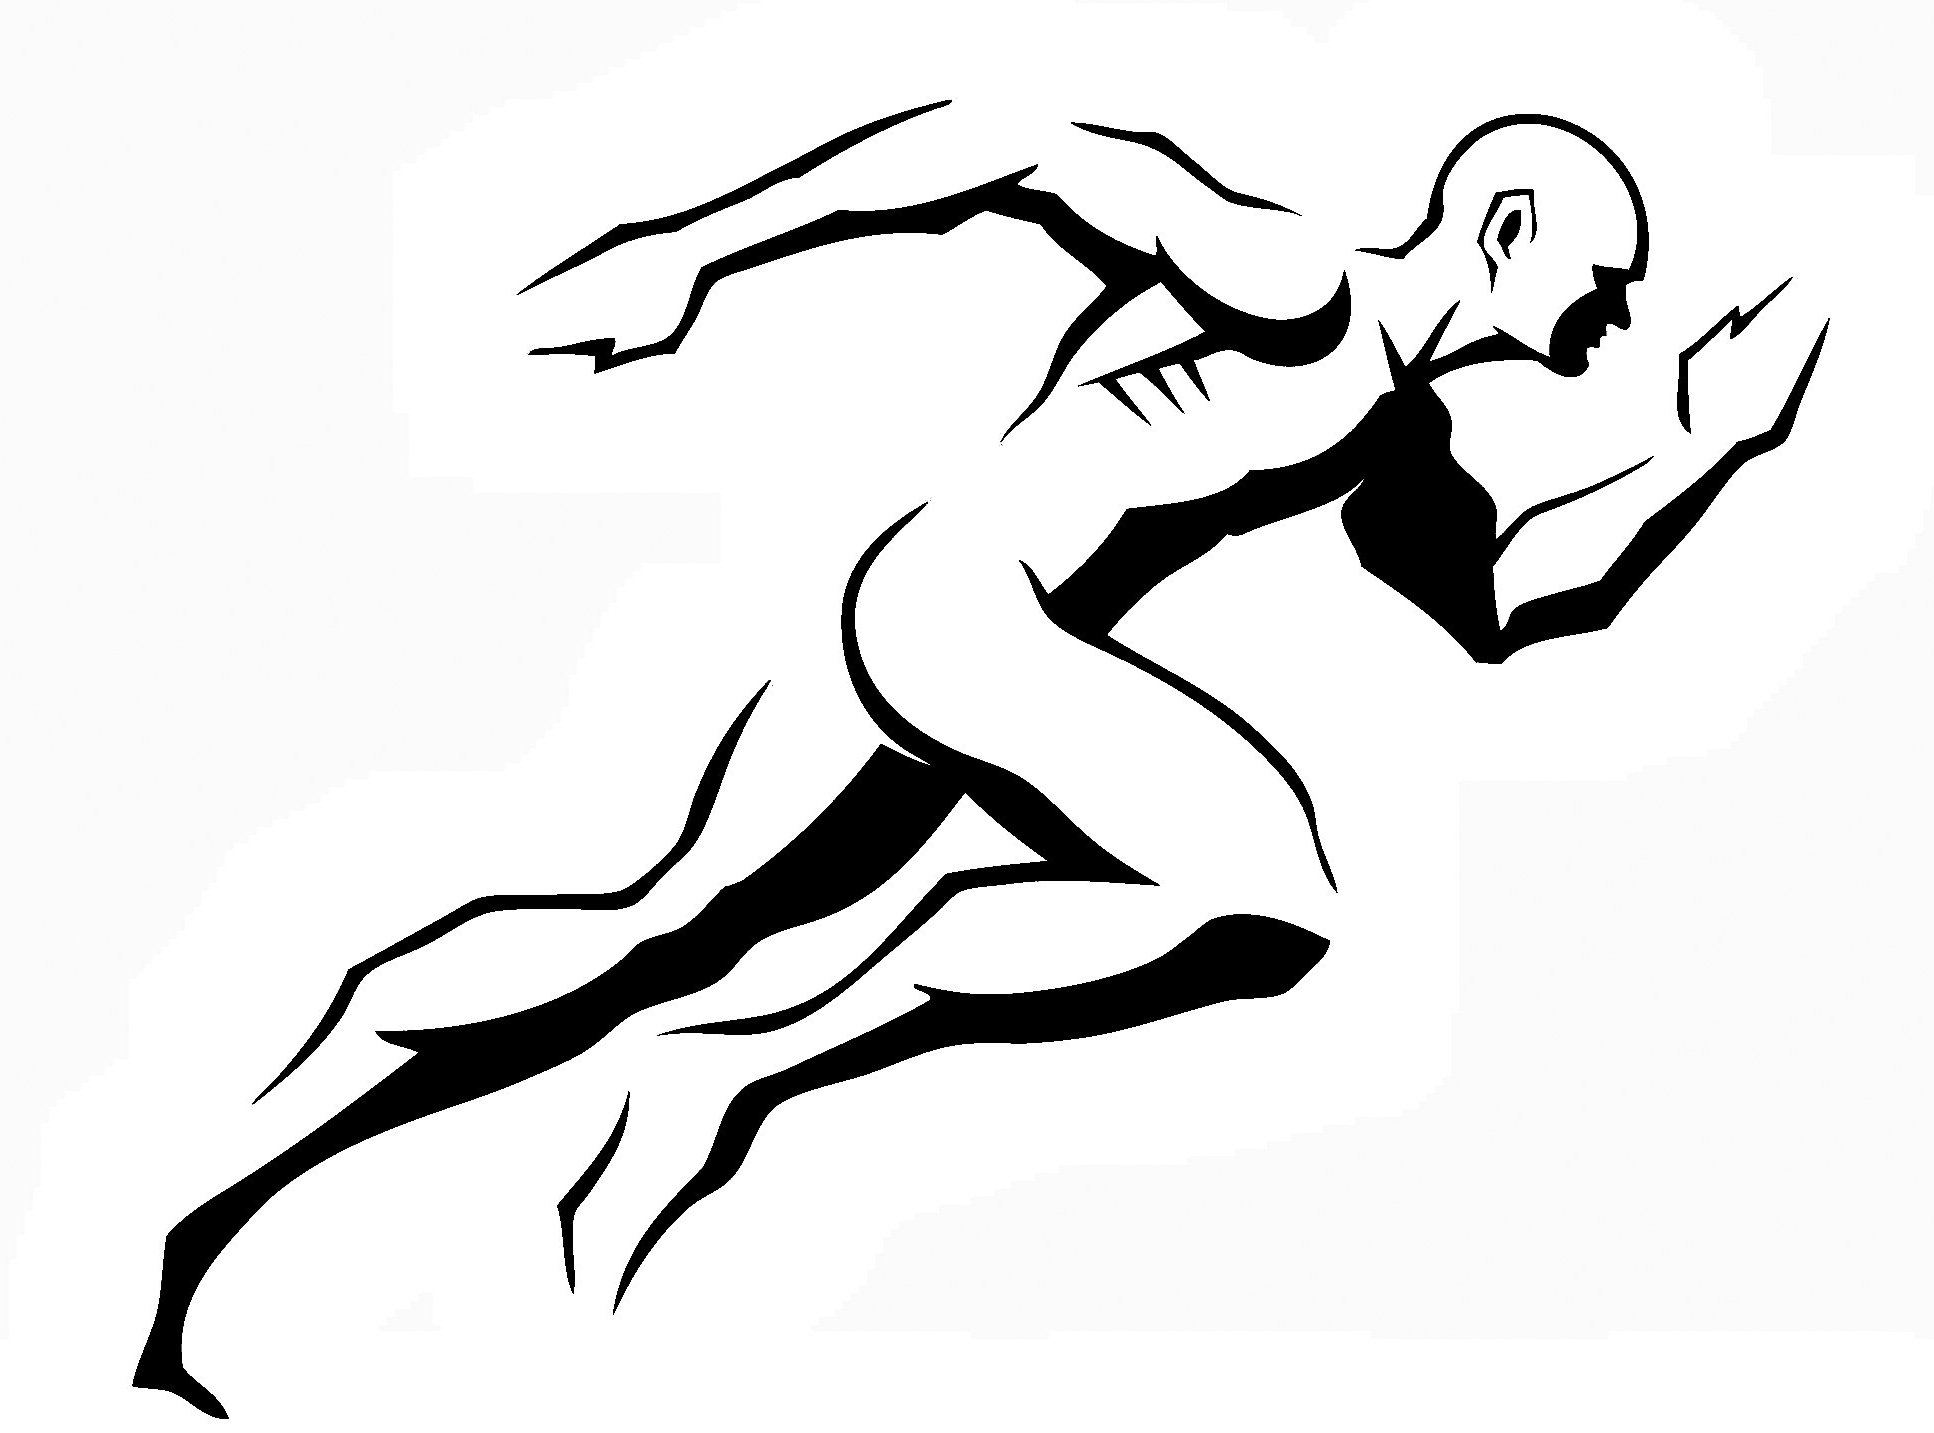 Logo With Running Man - ClipArt Best